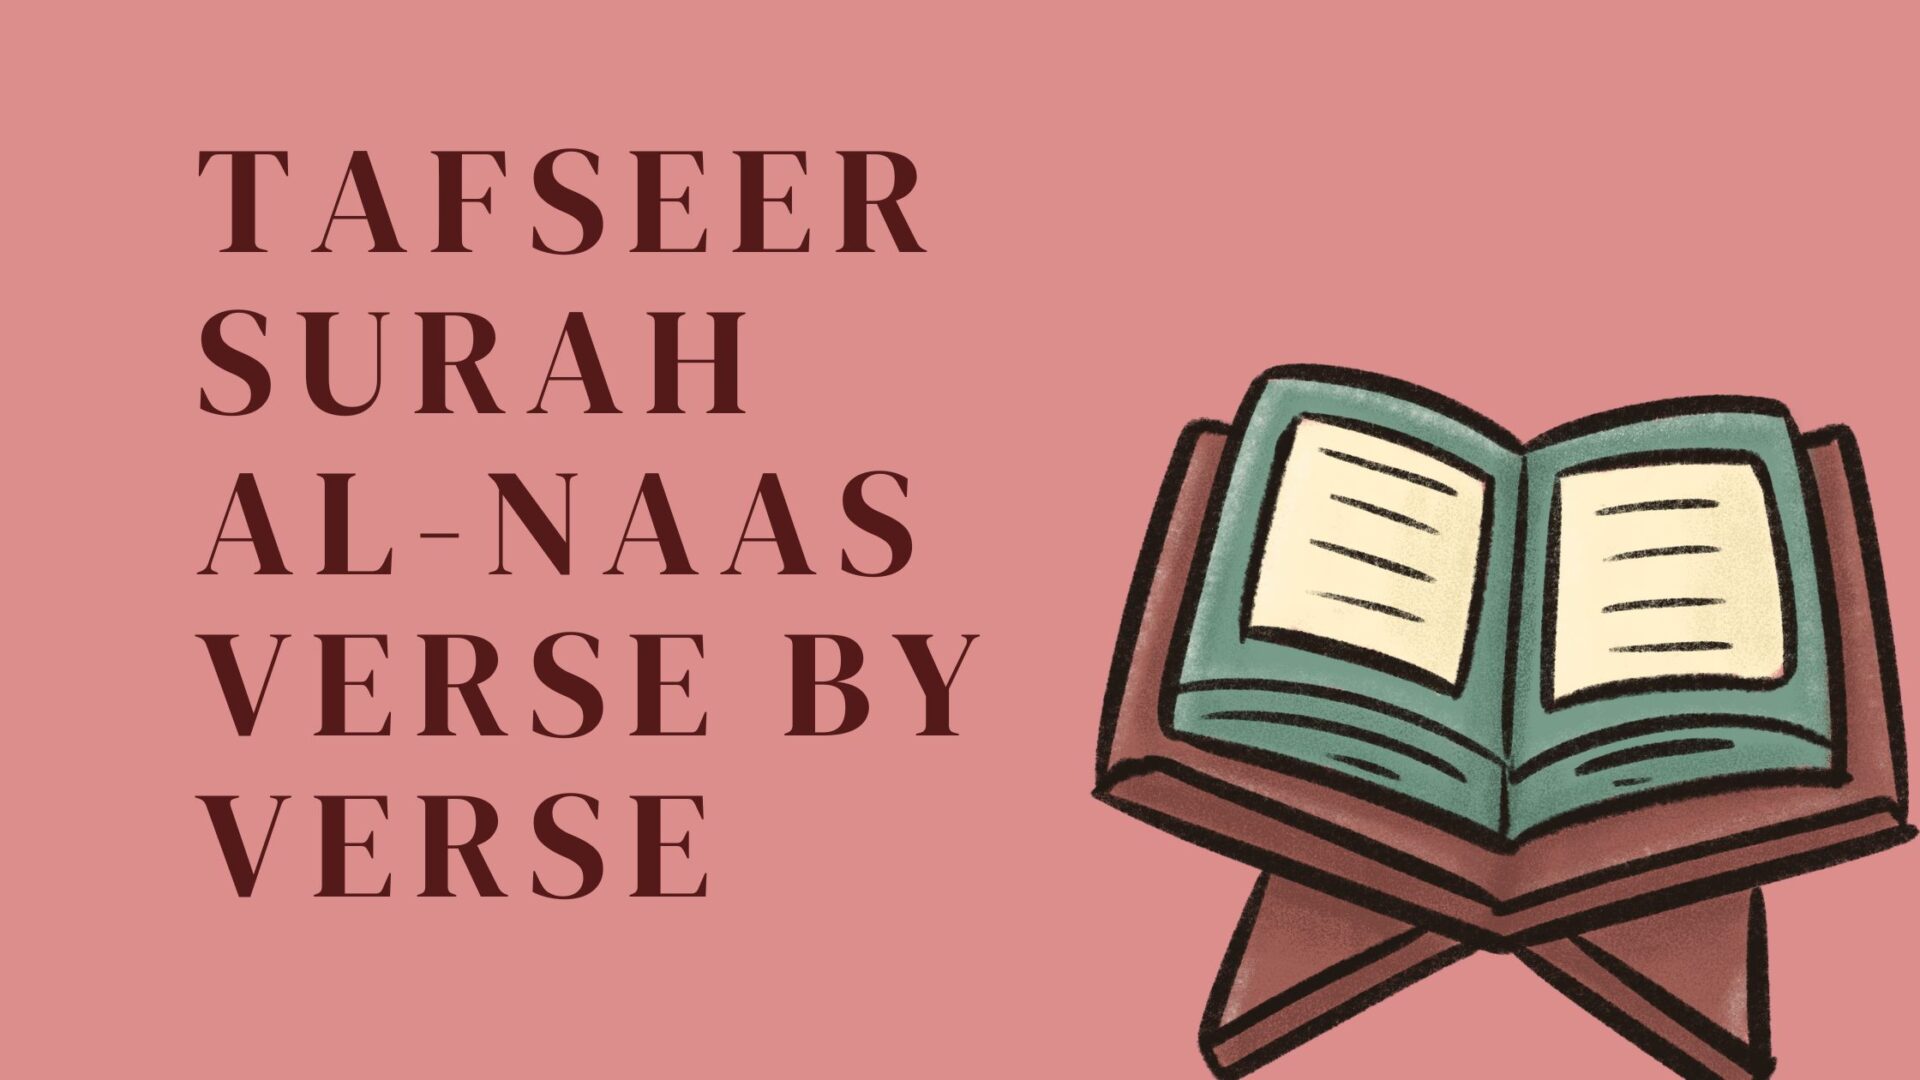 Tafseer Surah Al-Naas Verse by Verse